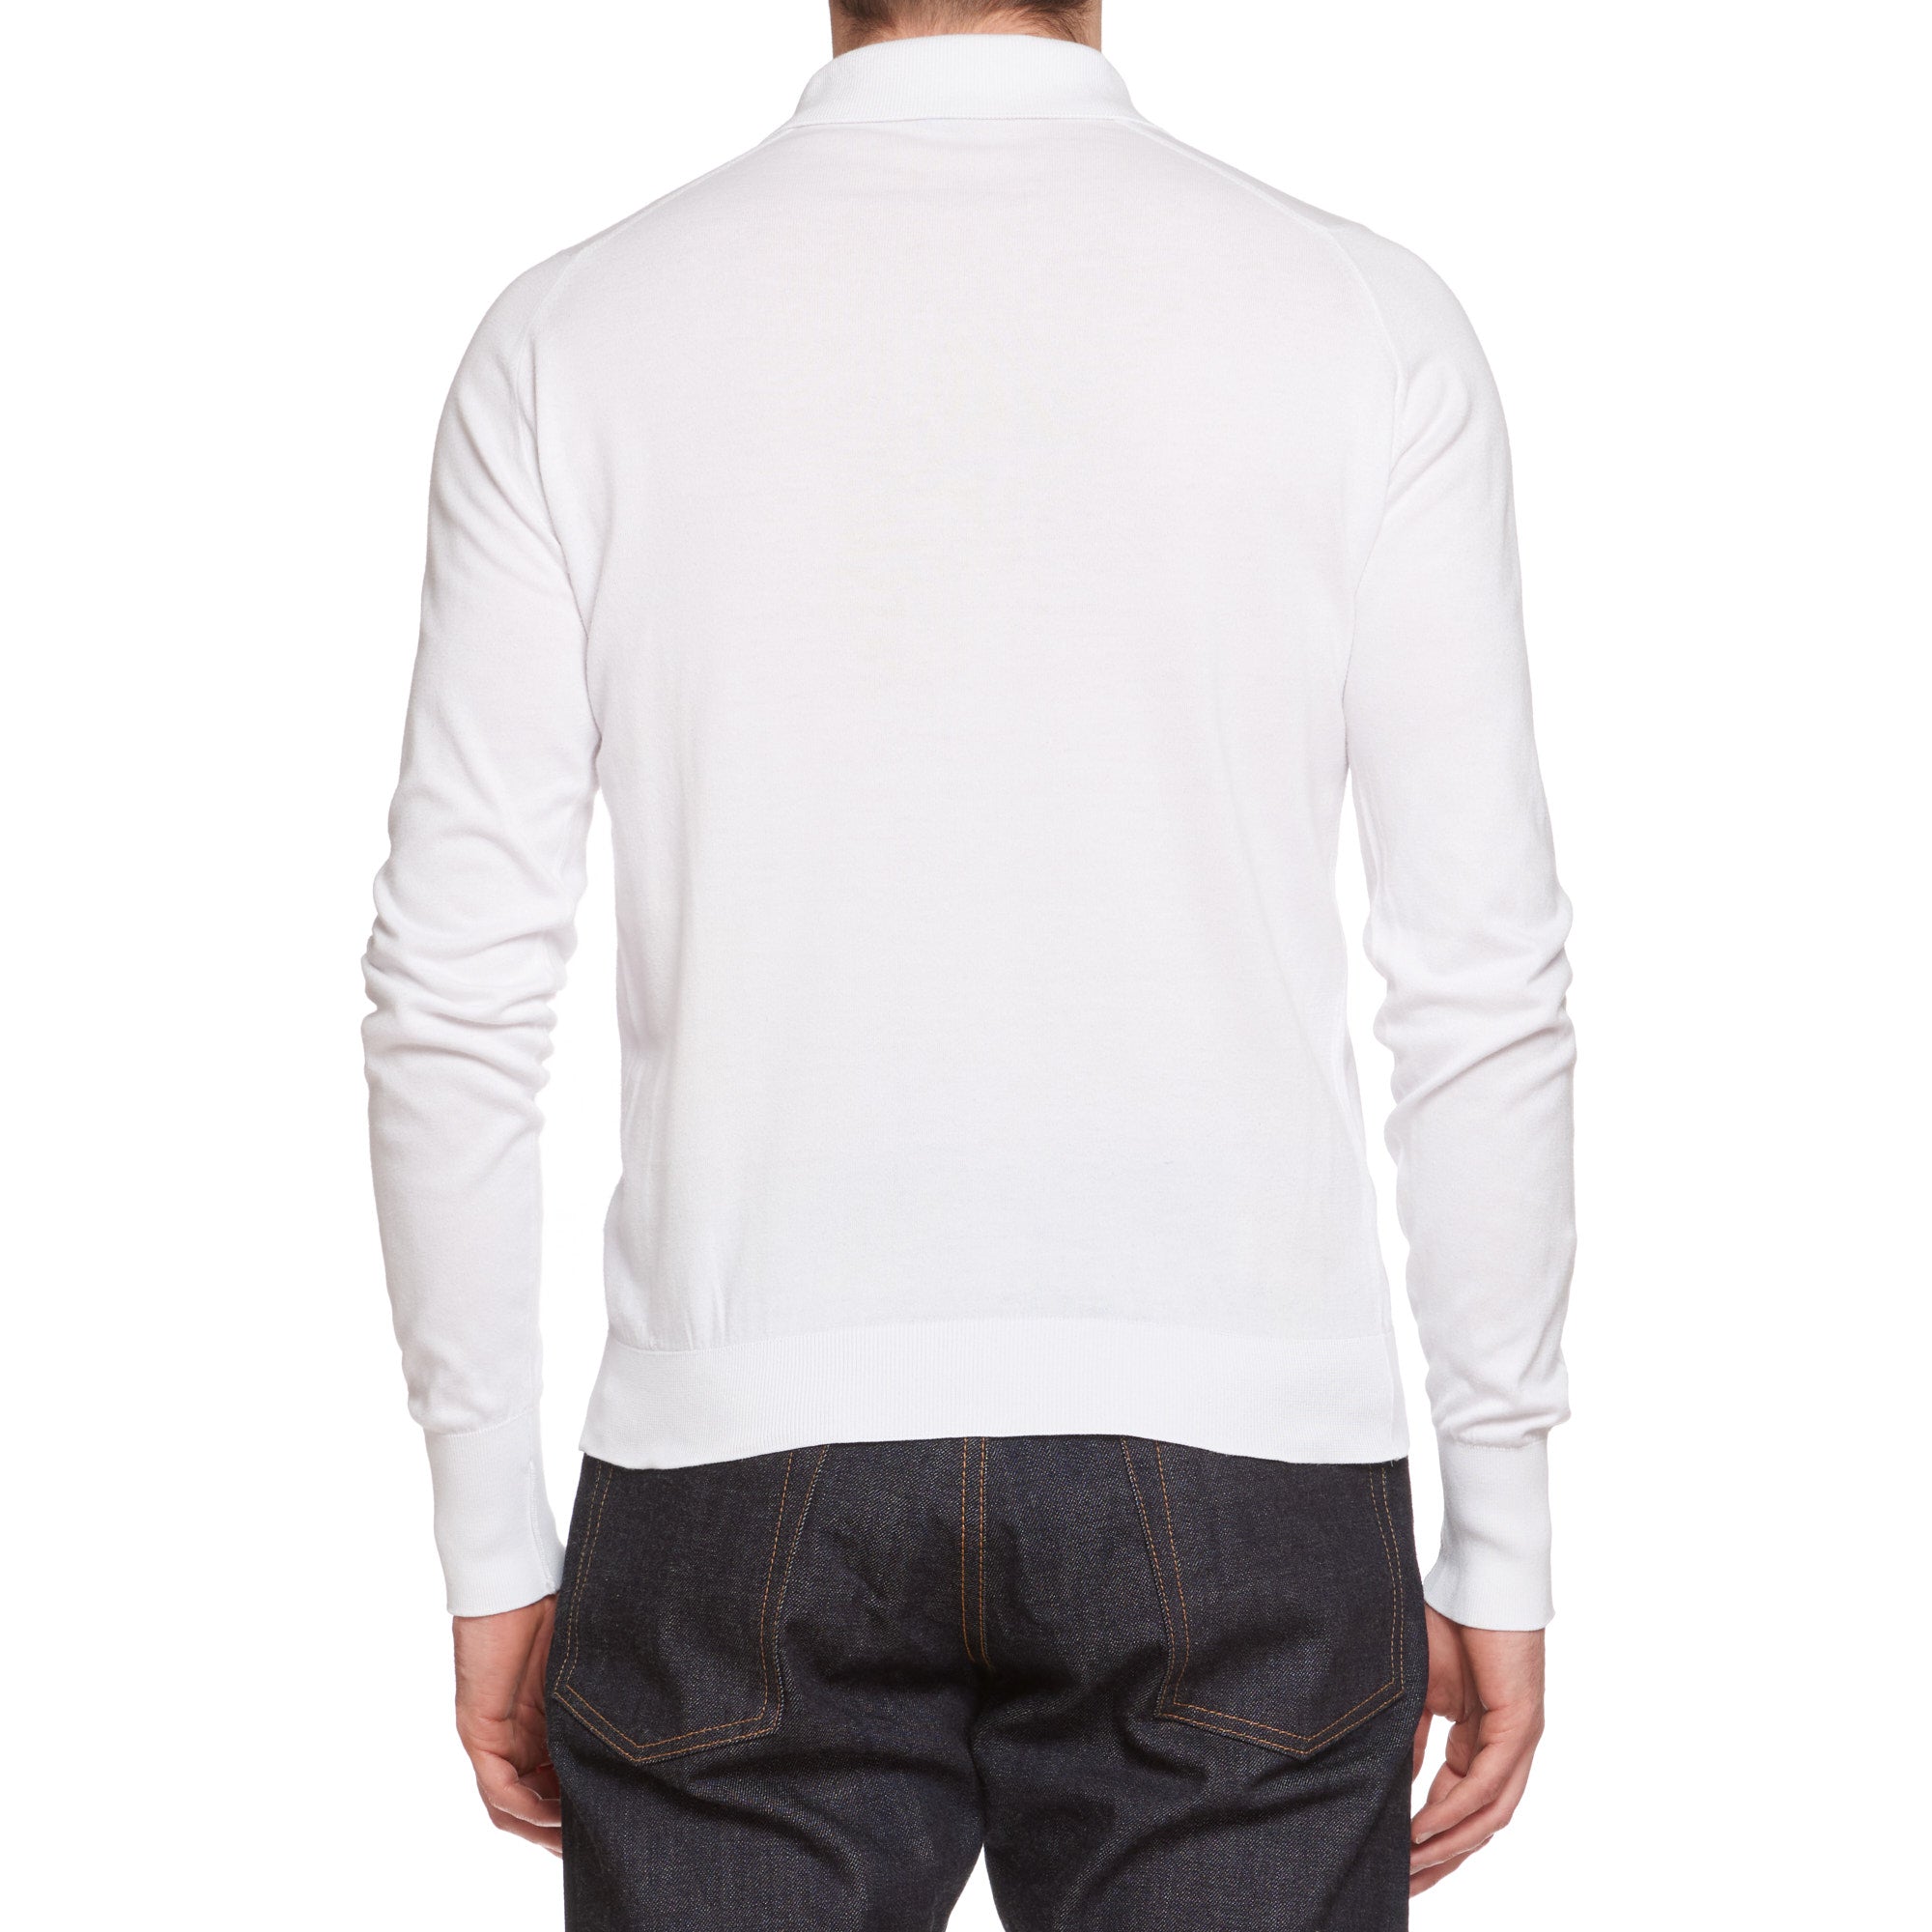 JOHN SMEDLEY White Sea Island Cotton Polo Shirt Sweater Size M UK Made JOHN SMEDLEY